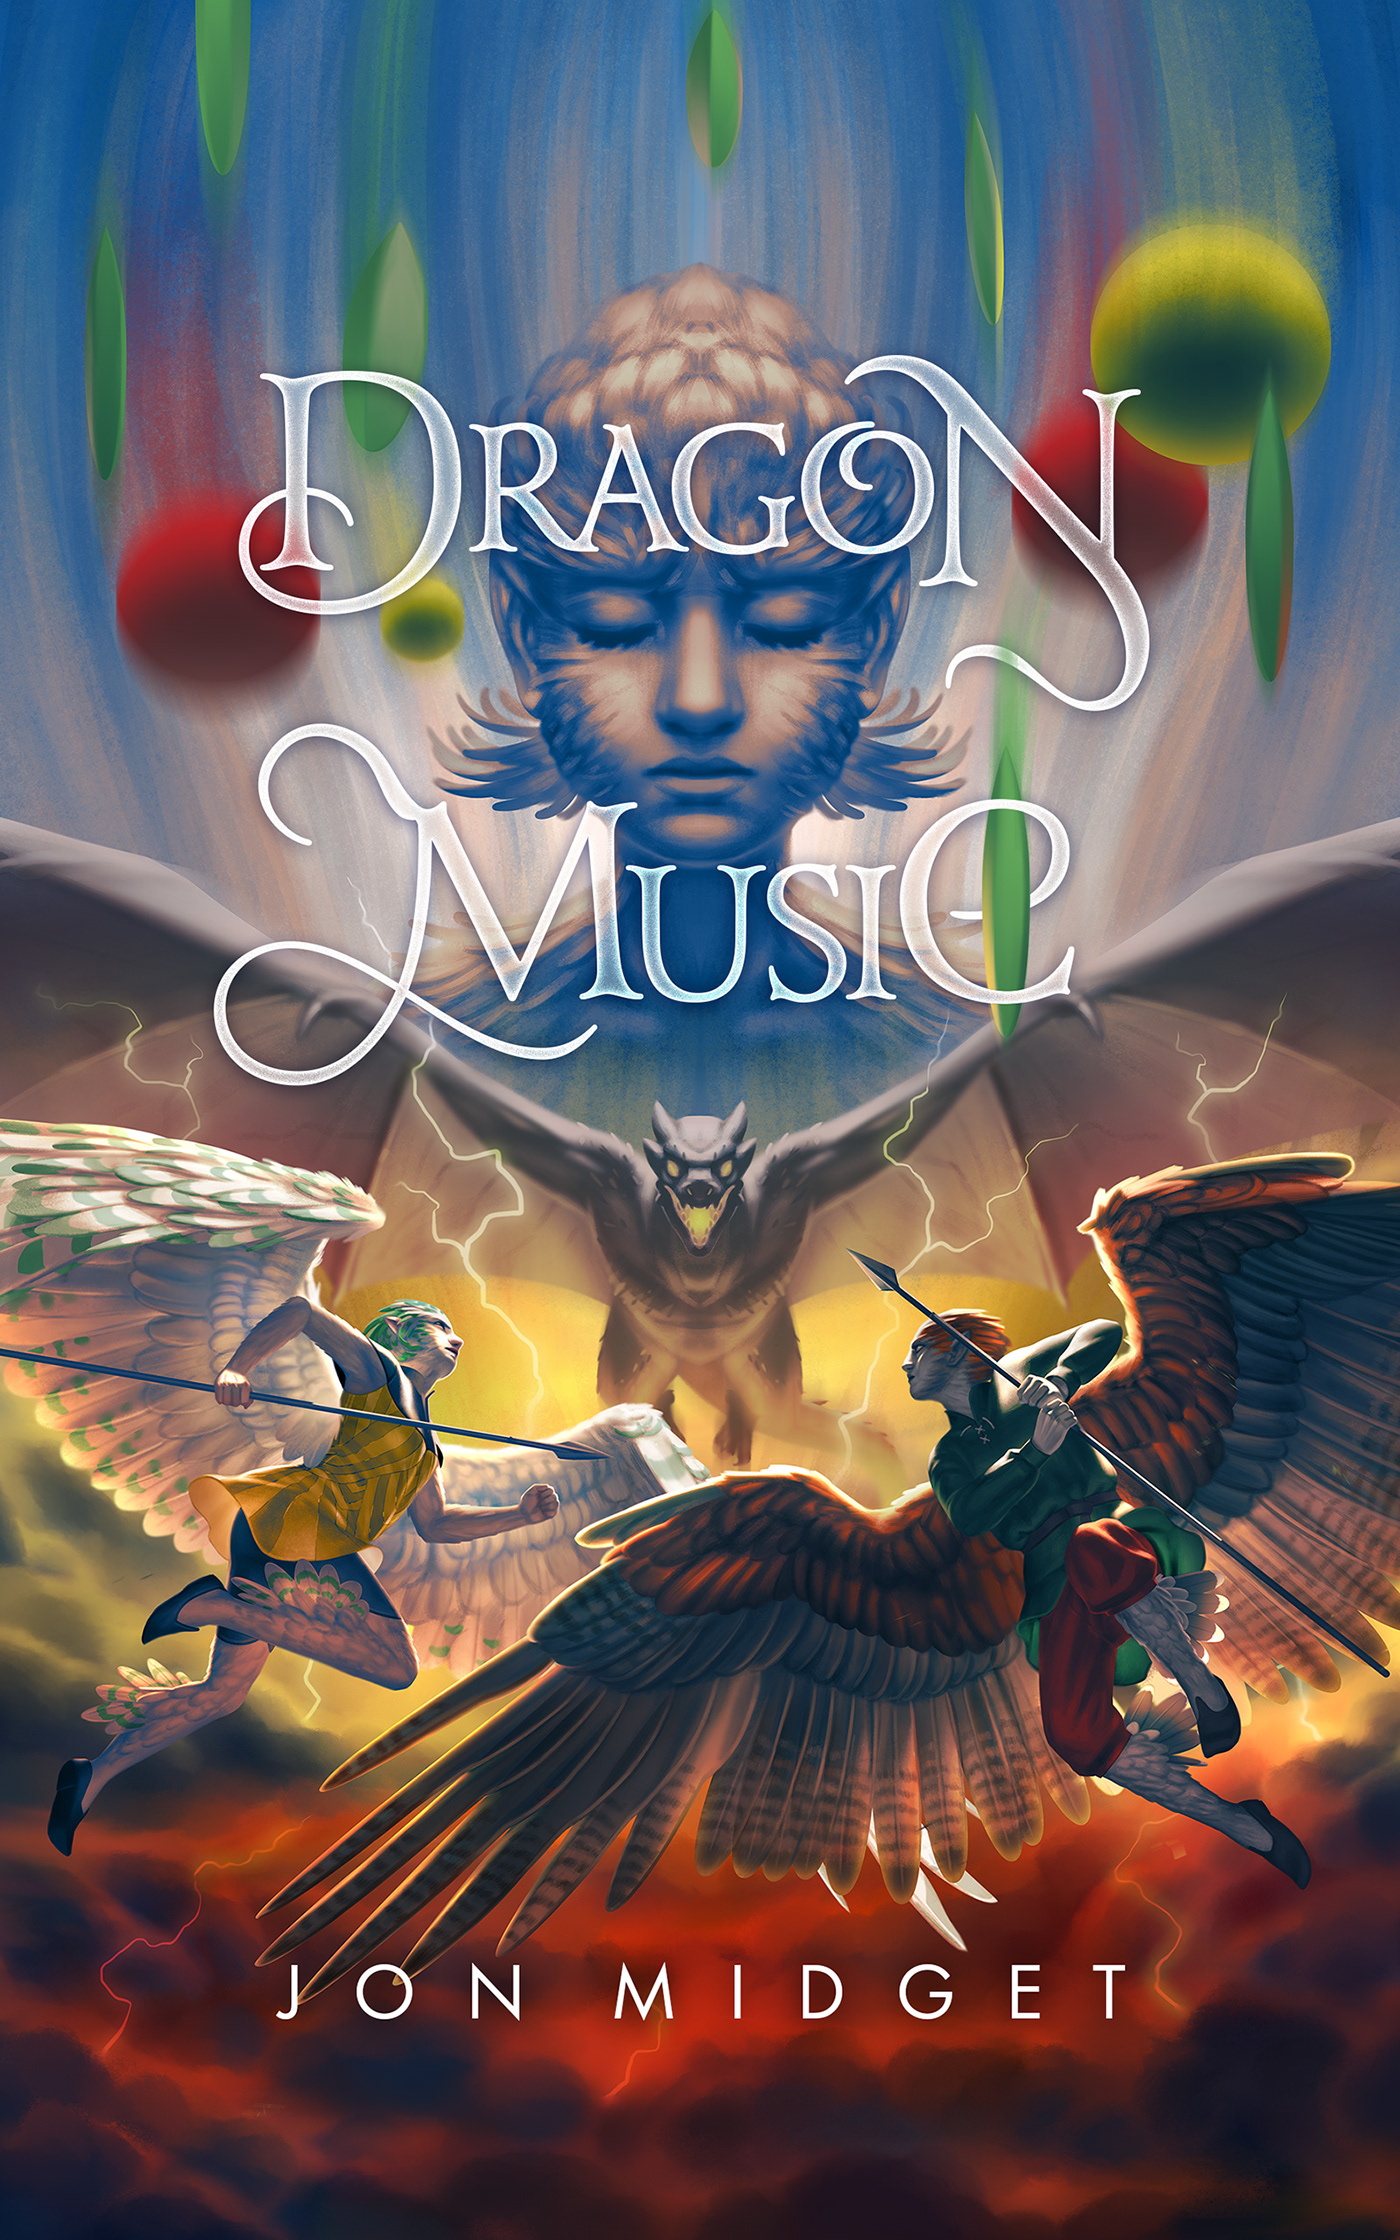 book cover book cover artist fantasy book Middle grade dragon dragon book harpy angel bird people Harpy girl